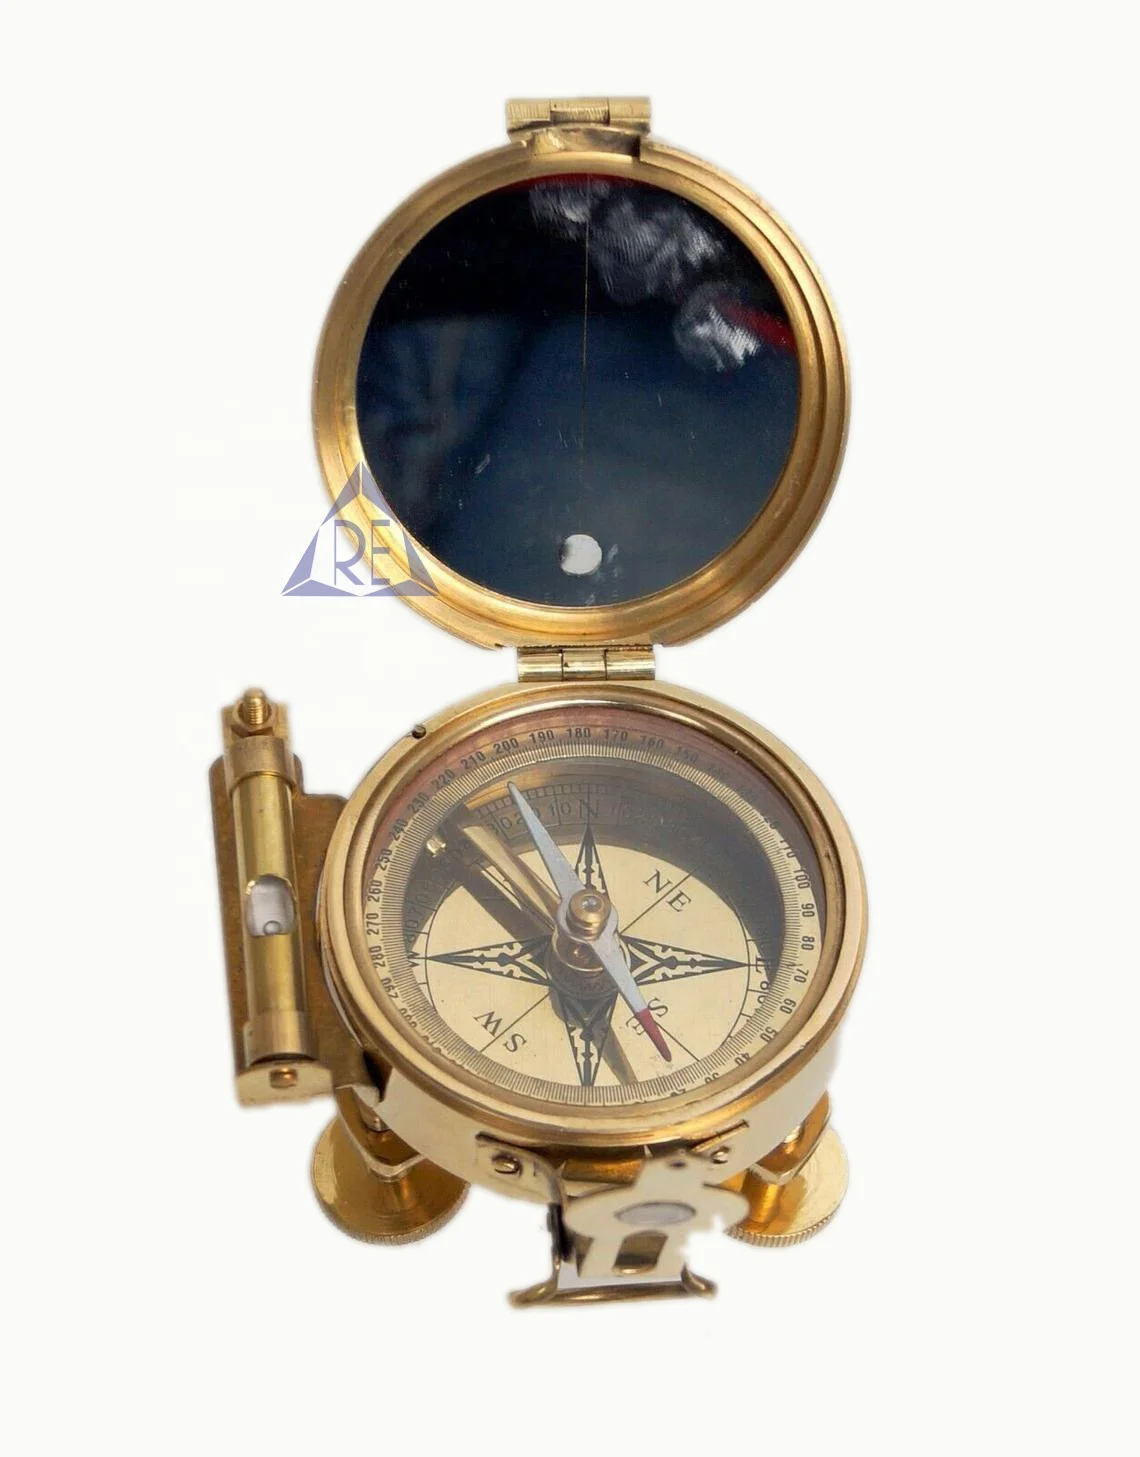 Antique Brass BRUNTON COMPASS Vintage Surveying Nautical Compass Gift 